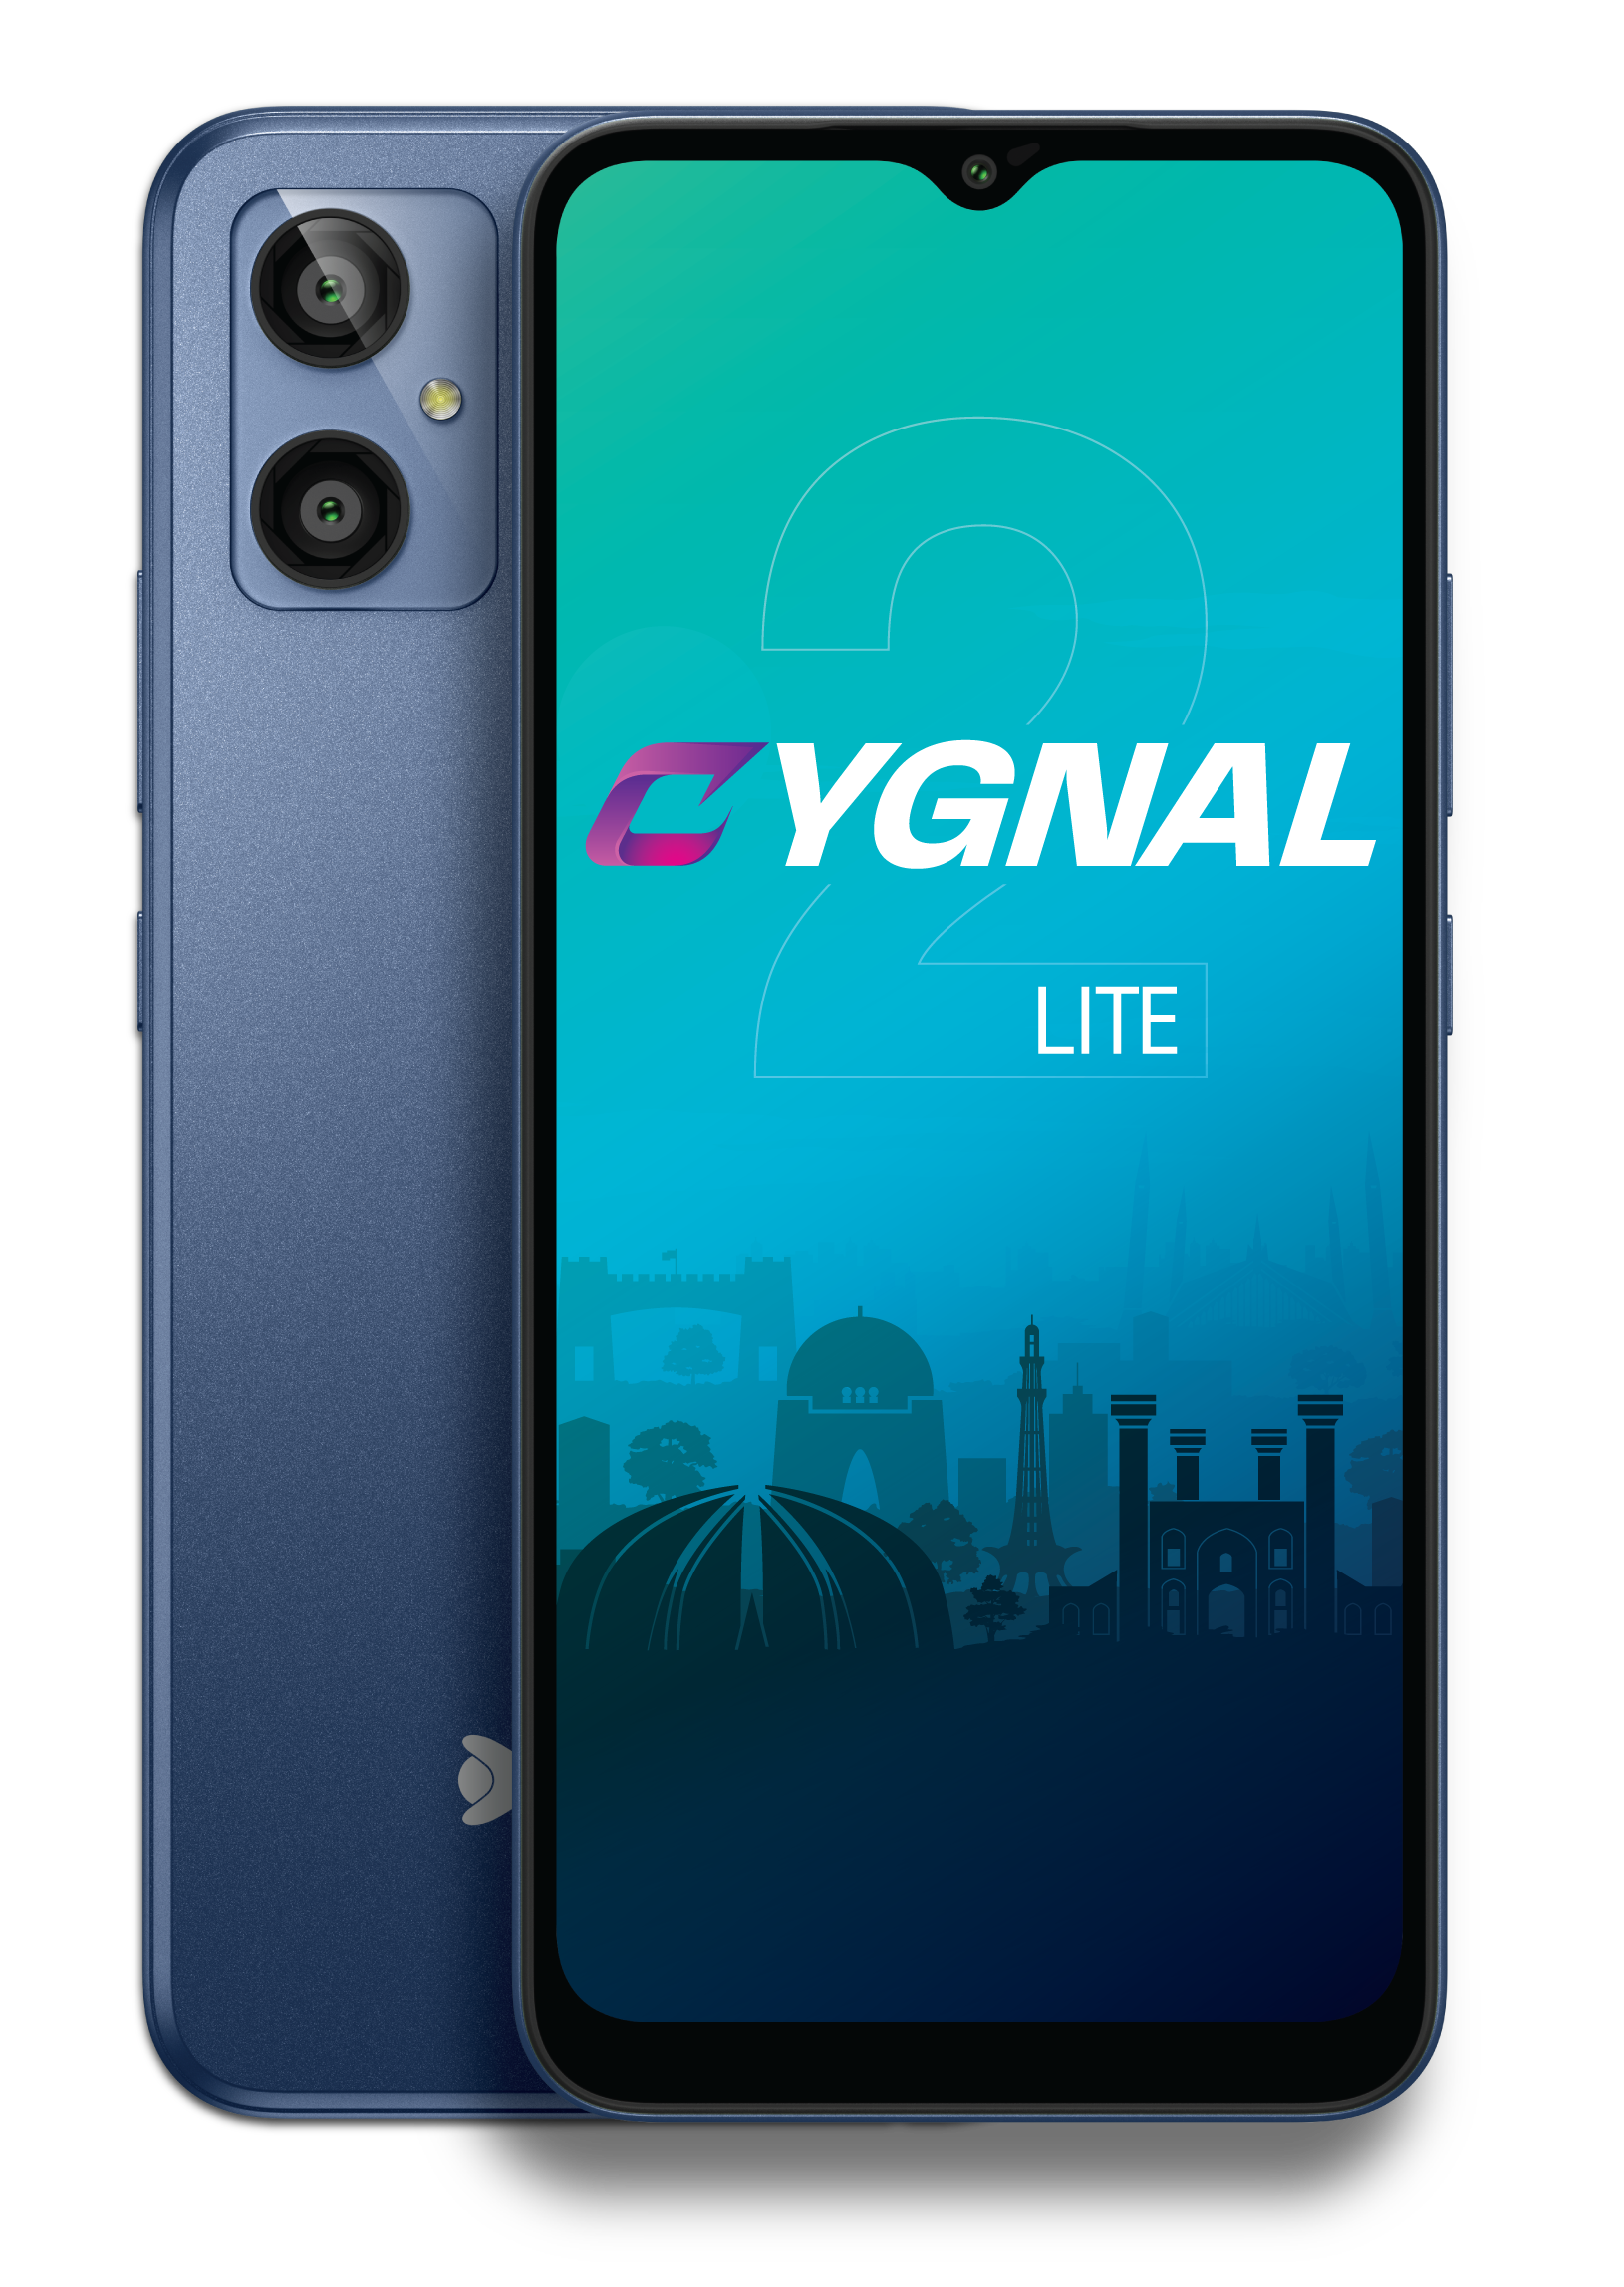 CYGNAL 2 LITE mobile